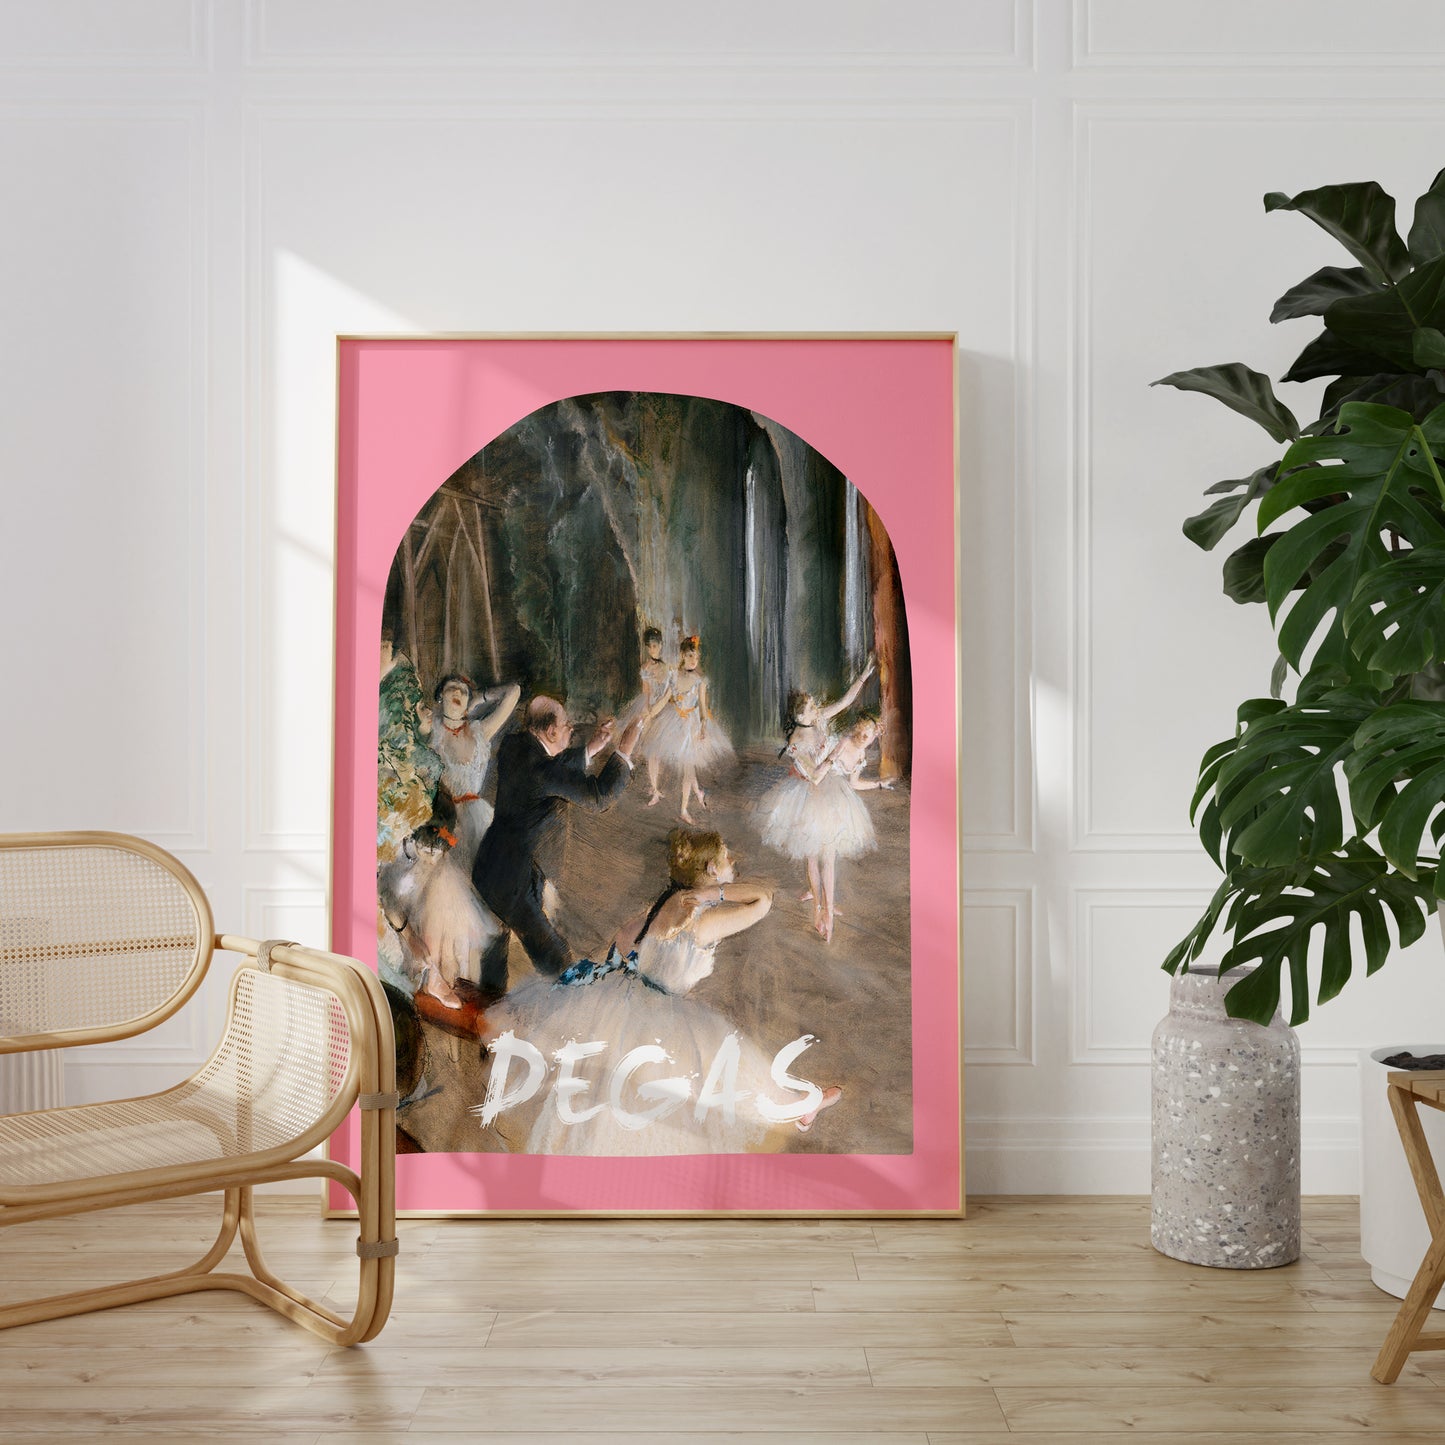 Pink Degas Wall Poster Print